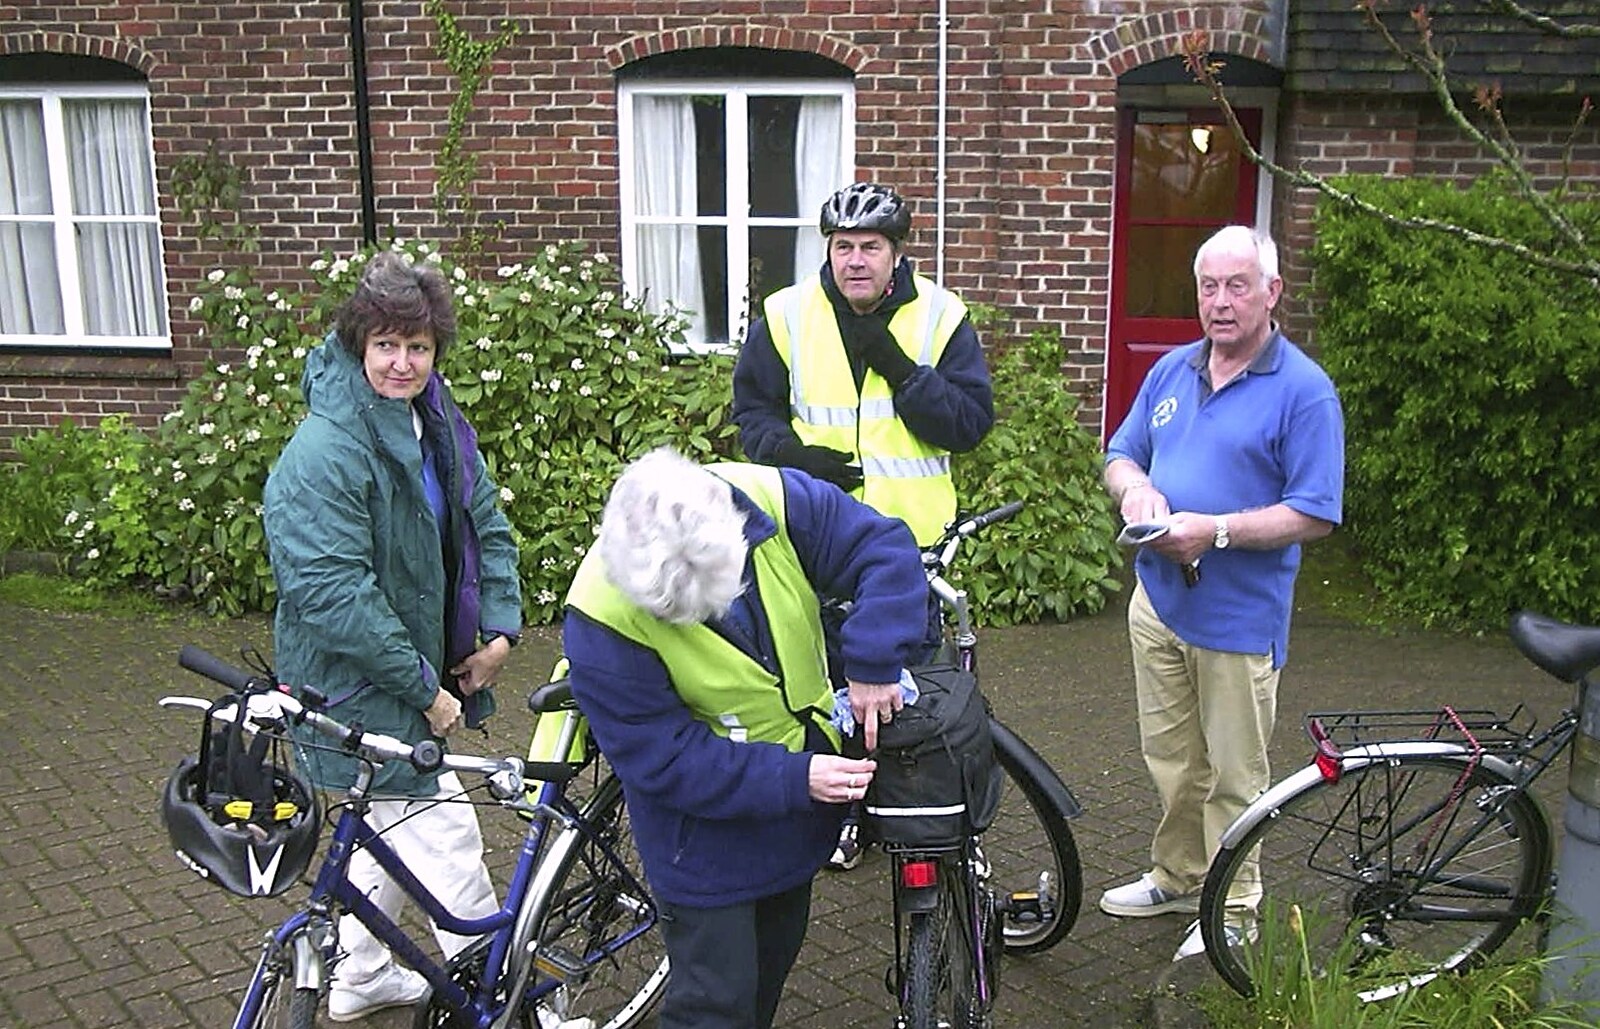 The BSCC Annual Bike Ride, Lenham, Kent - 8th May 2004: The Sagas get their bikes sorted